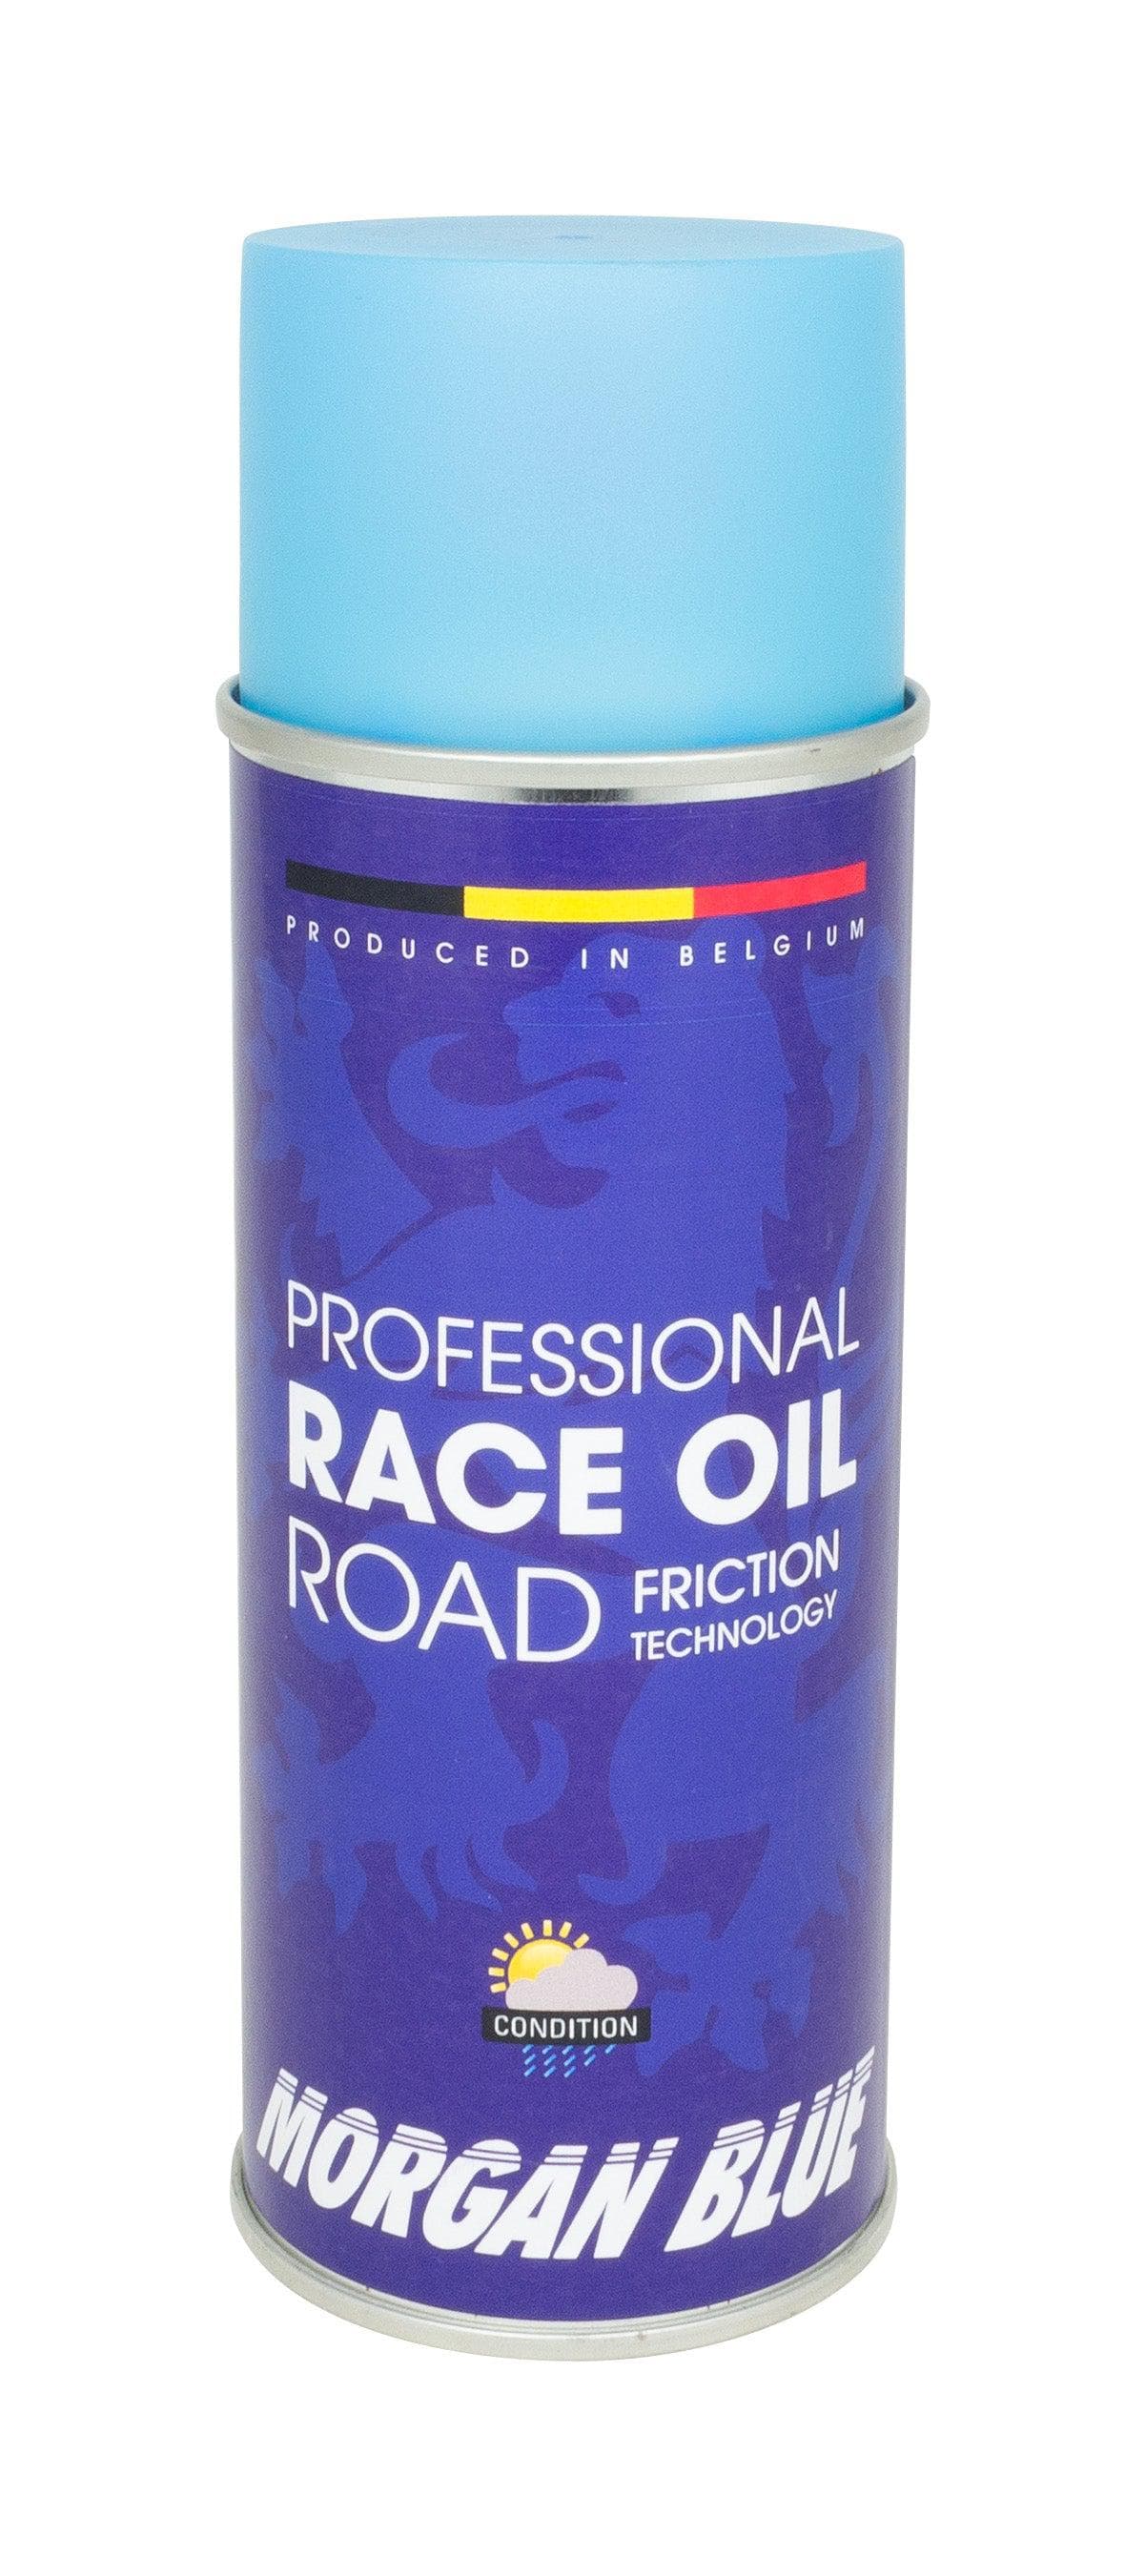 Morgan Blue Race Oil Road - Friction Technology (400cc, Aerosol)